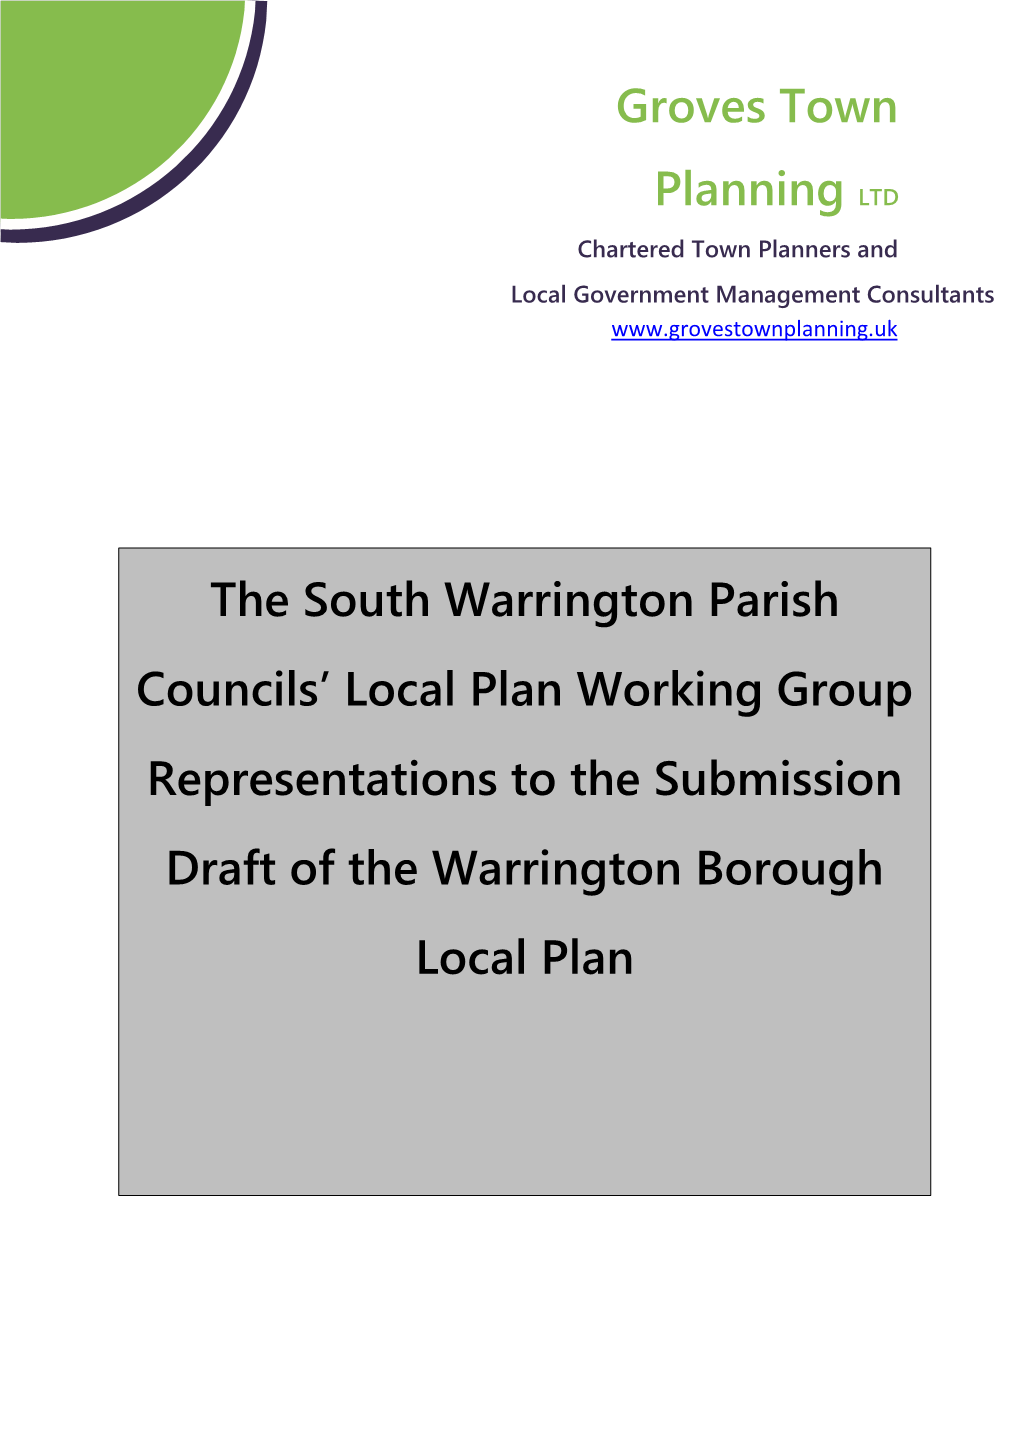 Groves Town Planning LTD the South Warrington Parish Councils' Local